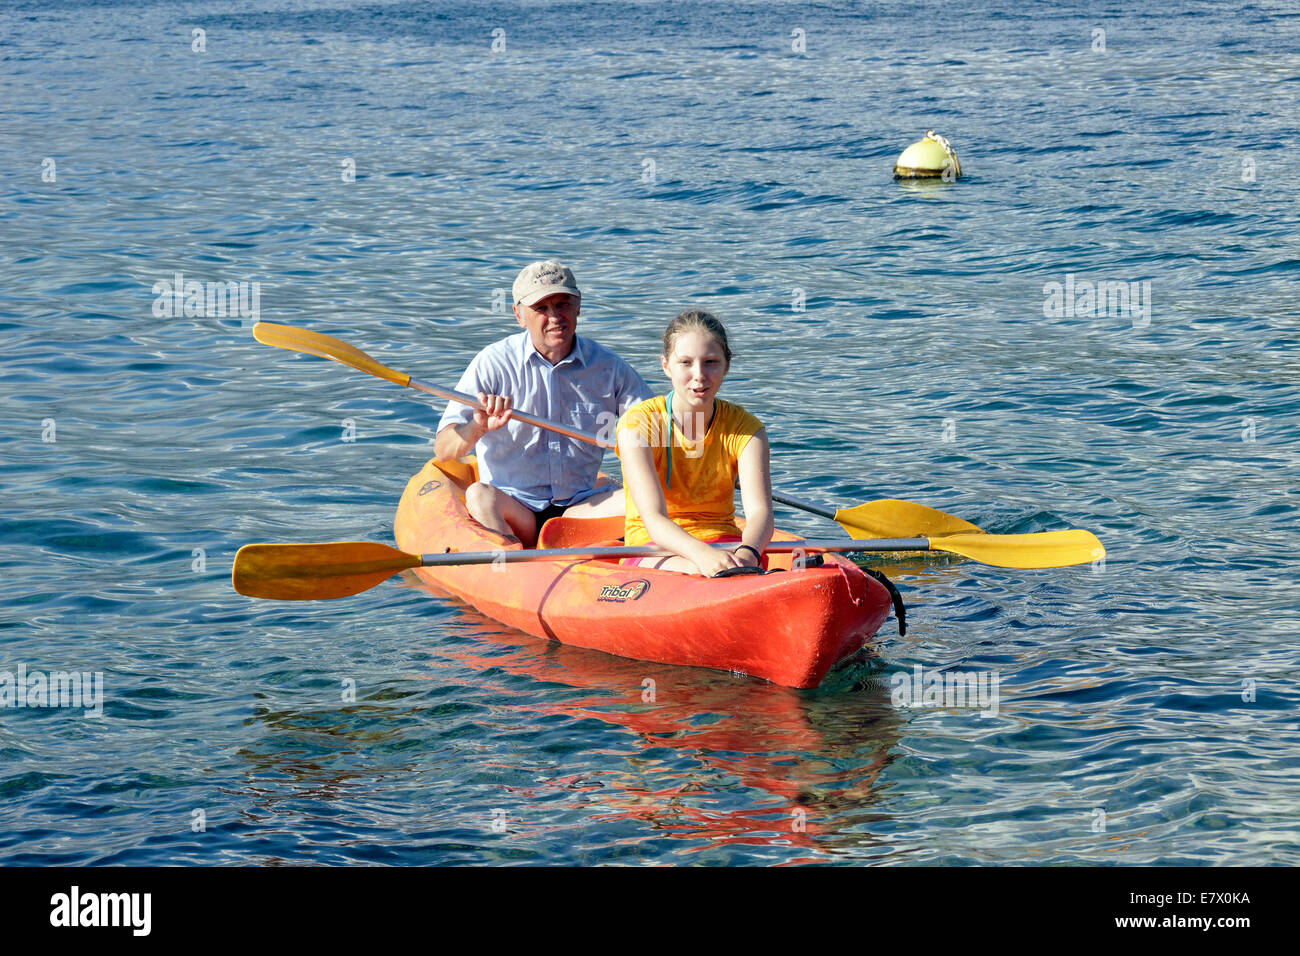 man and teenage girl in a canoe, Seveti Juraj, Kvarner Gulf, Croatia Stock Photo